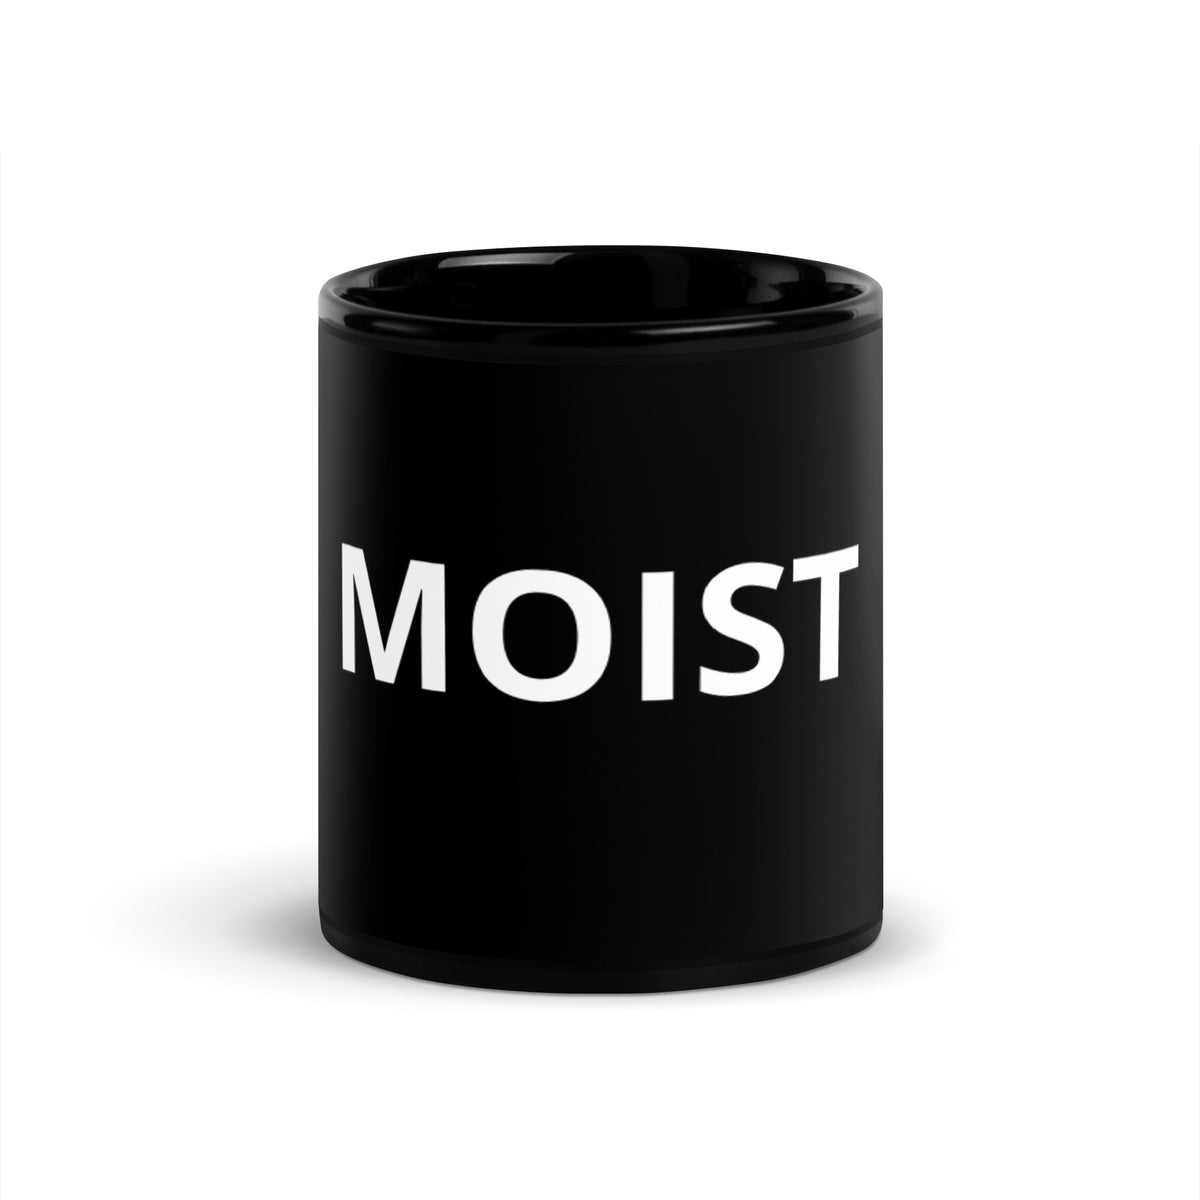 Moist - Black Glossy Mug